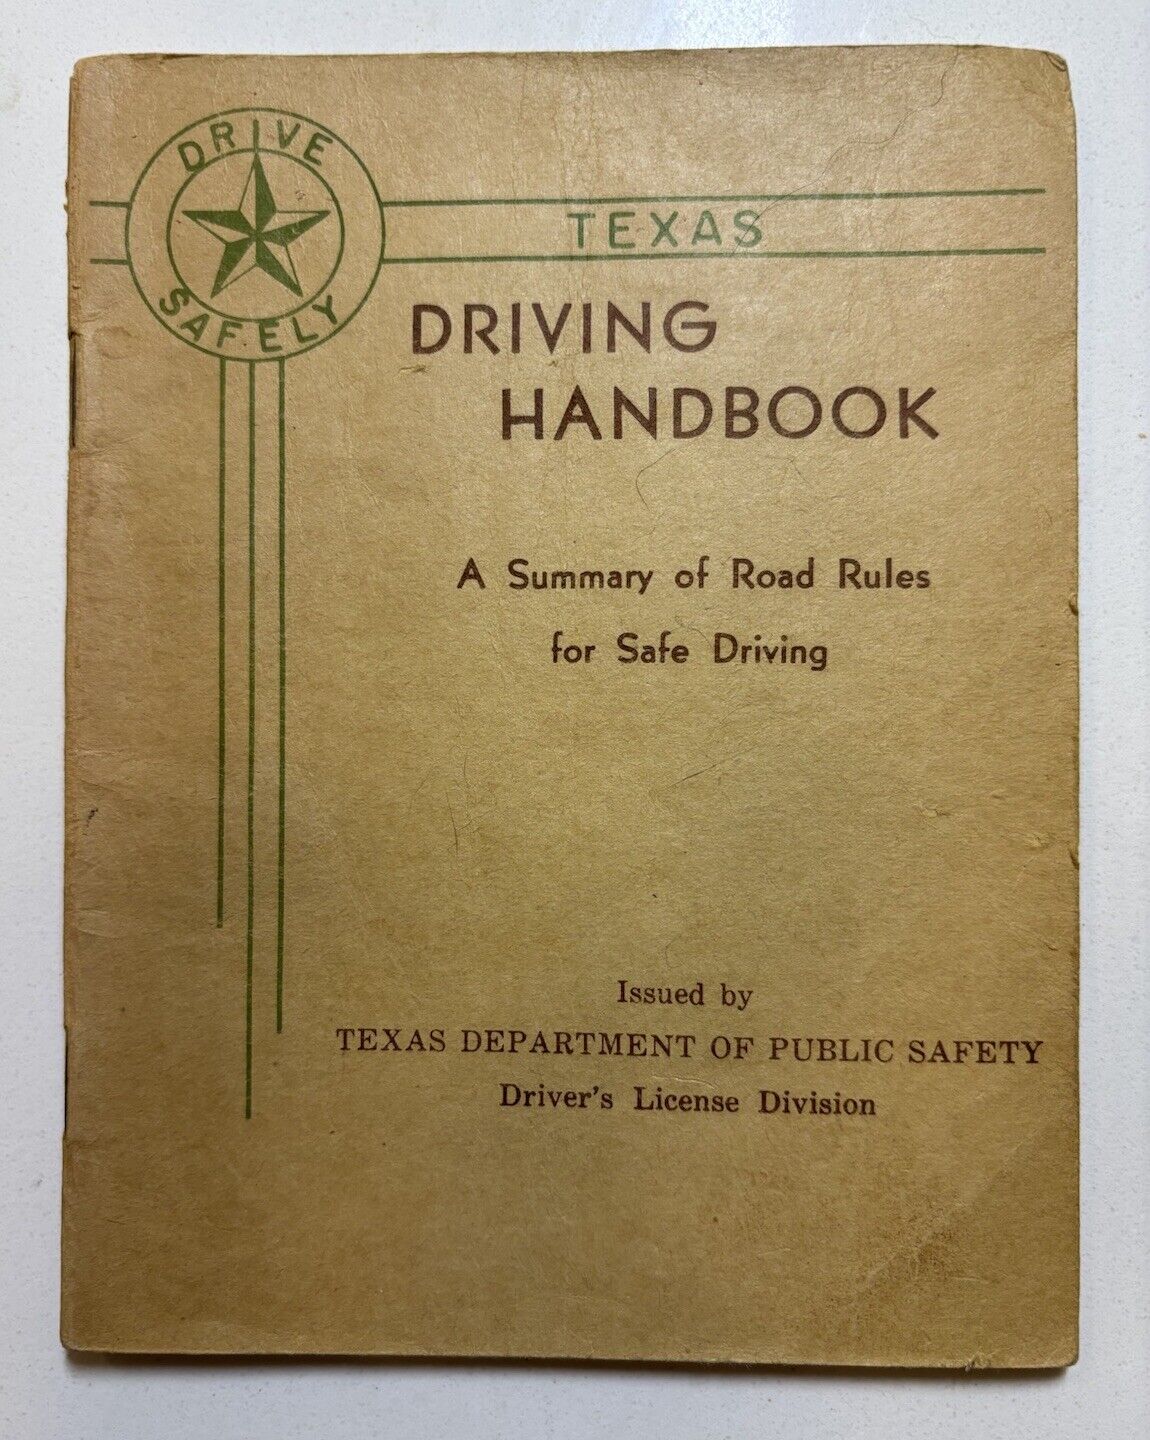 BOOKLET: 1947 Texas Driving Handbook - Tx Dept of Public Safety - 52pgs